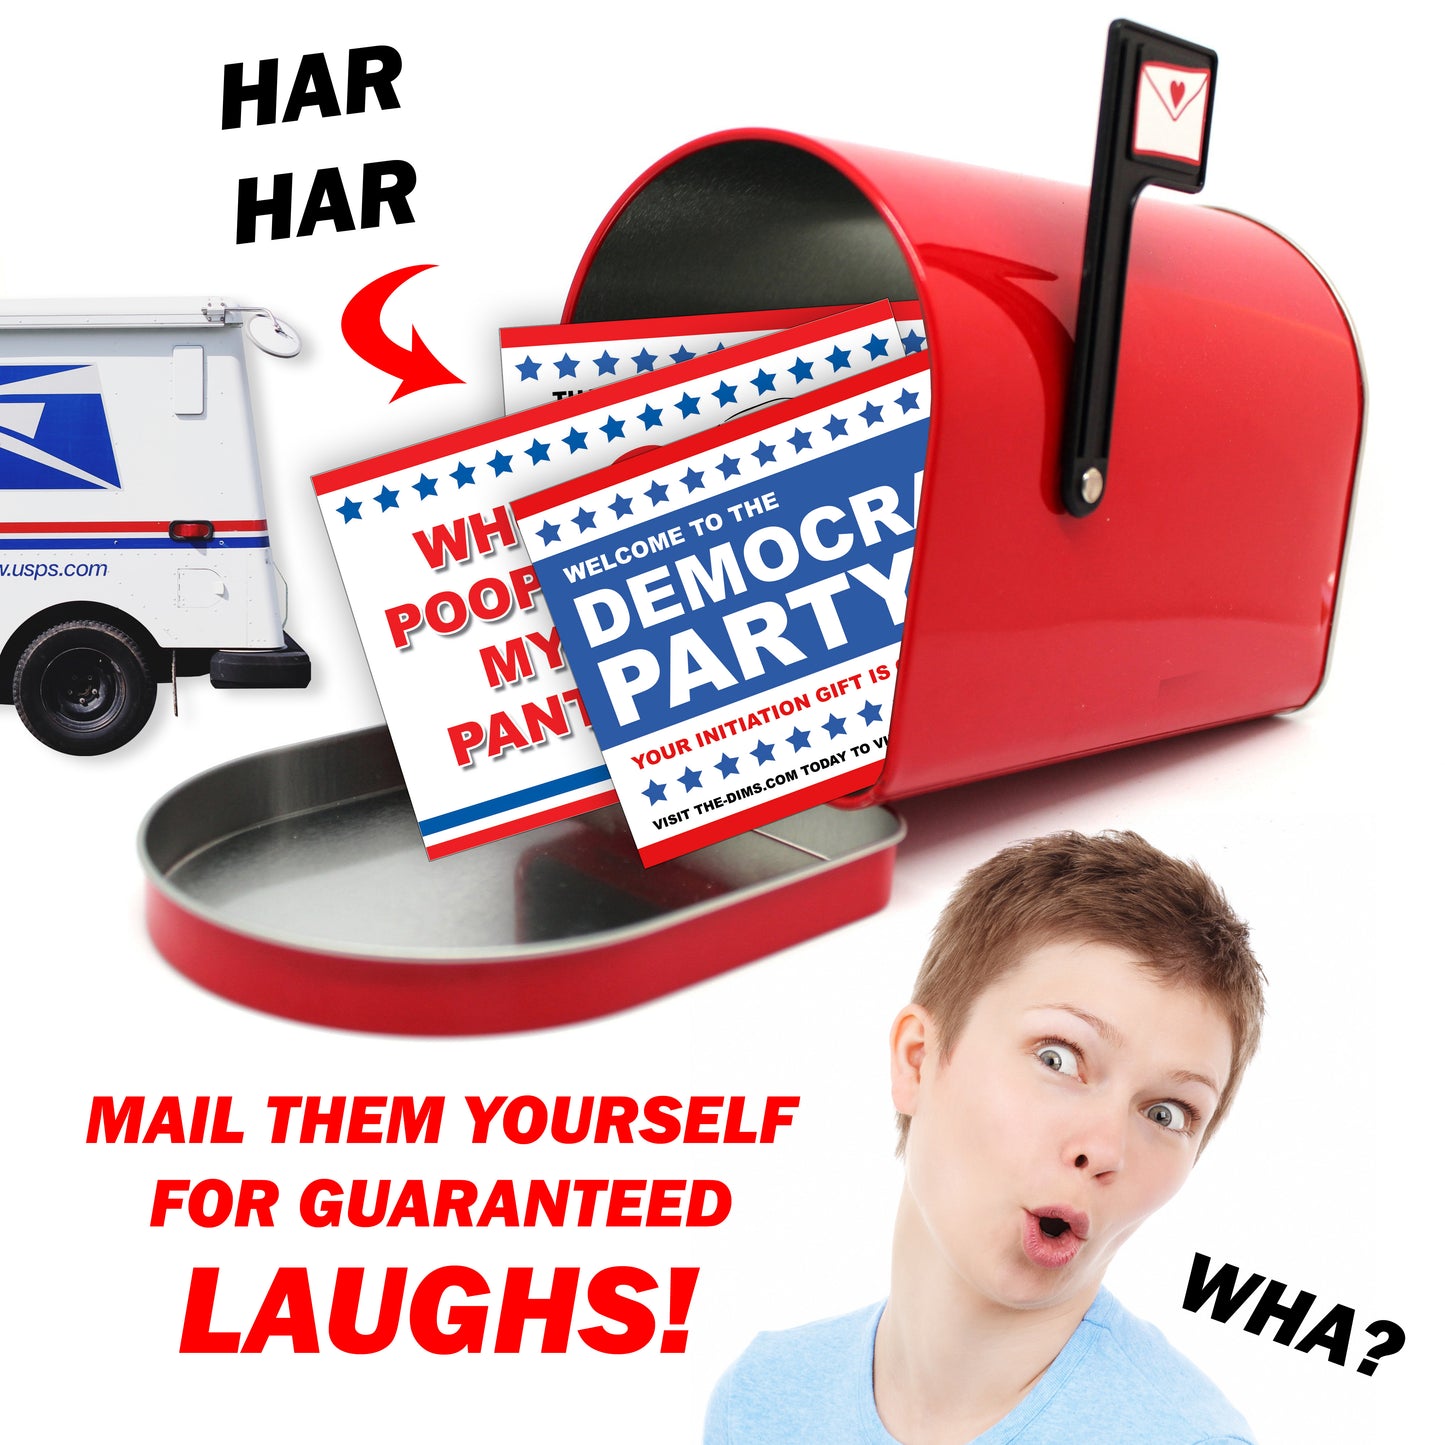 Biden Democratic 12 Pack Political Joke Postcards